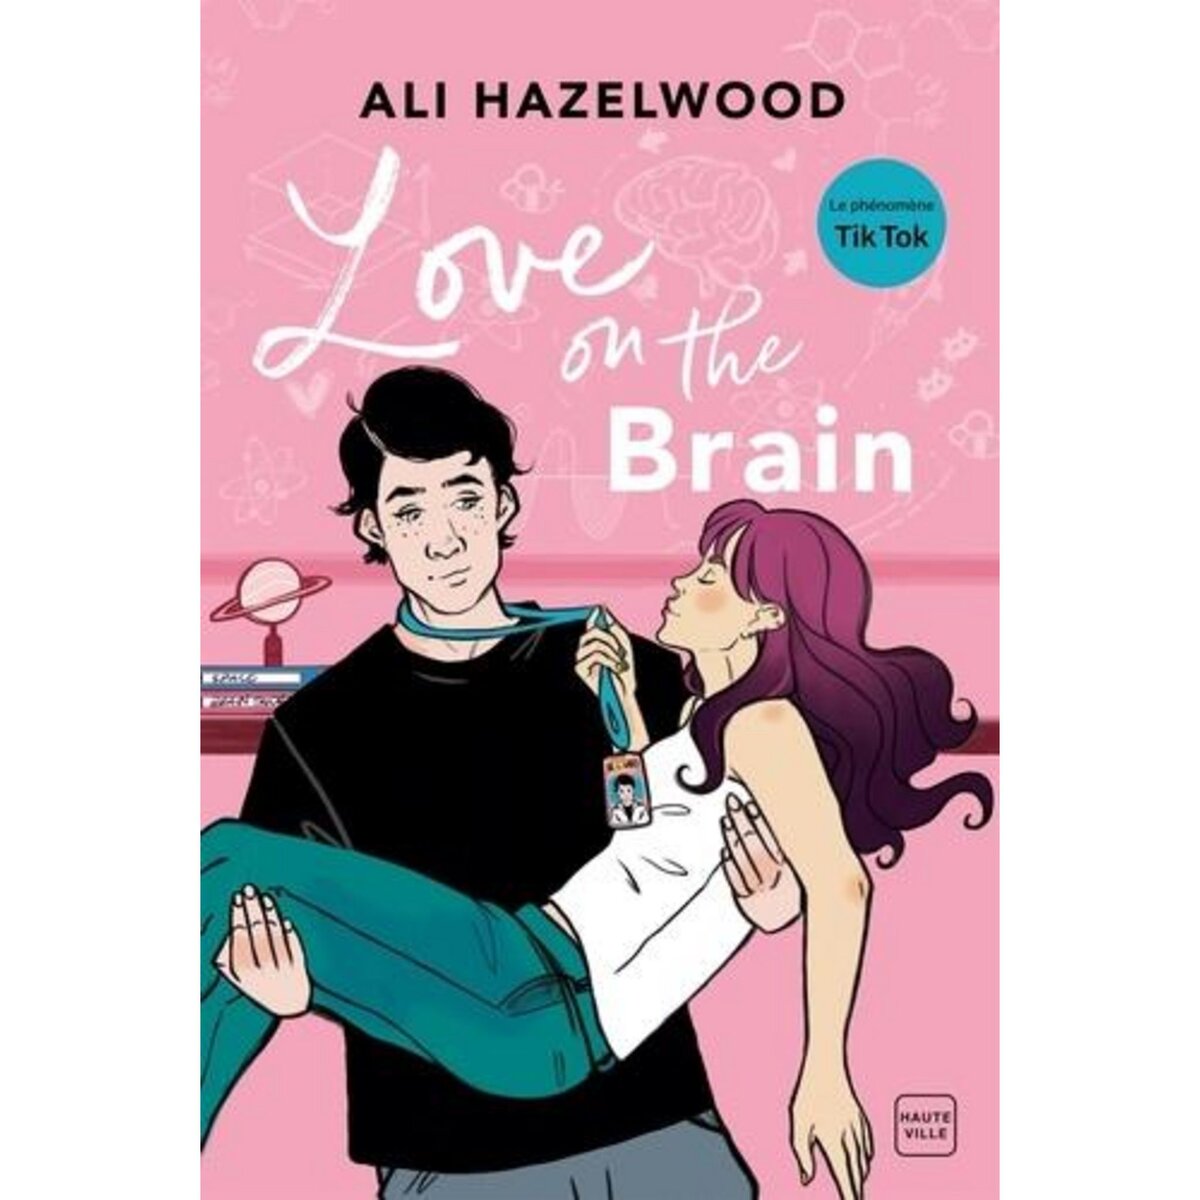  LOVE ON THE BRAIN, Hazelwood Ali